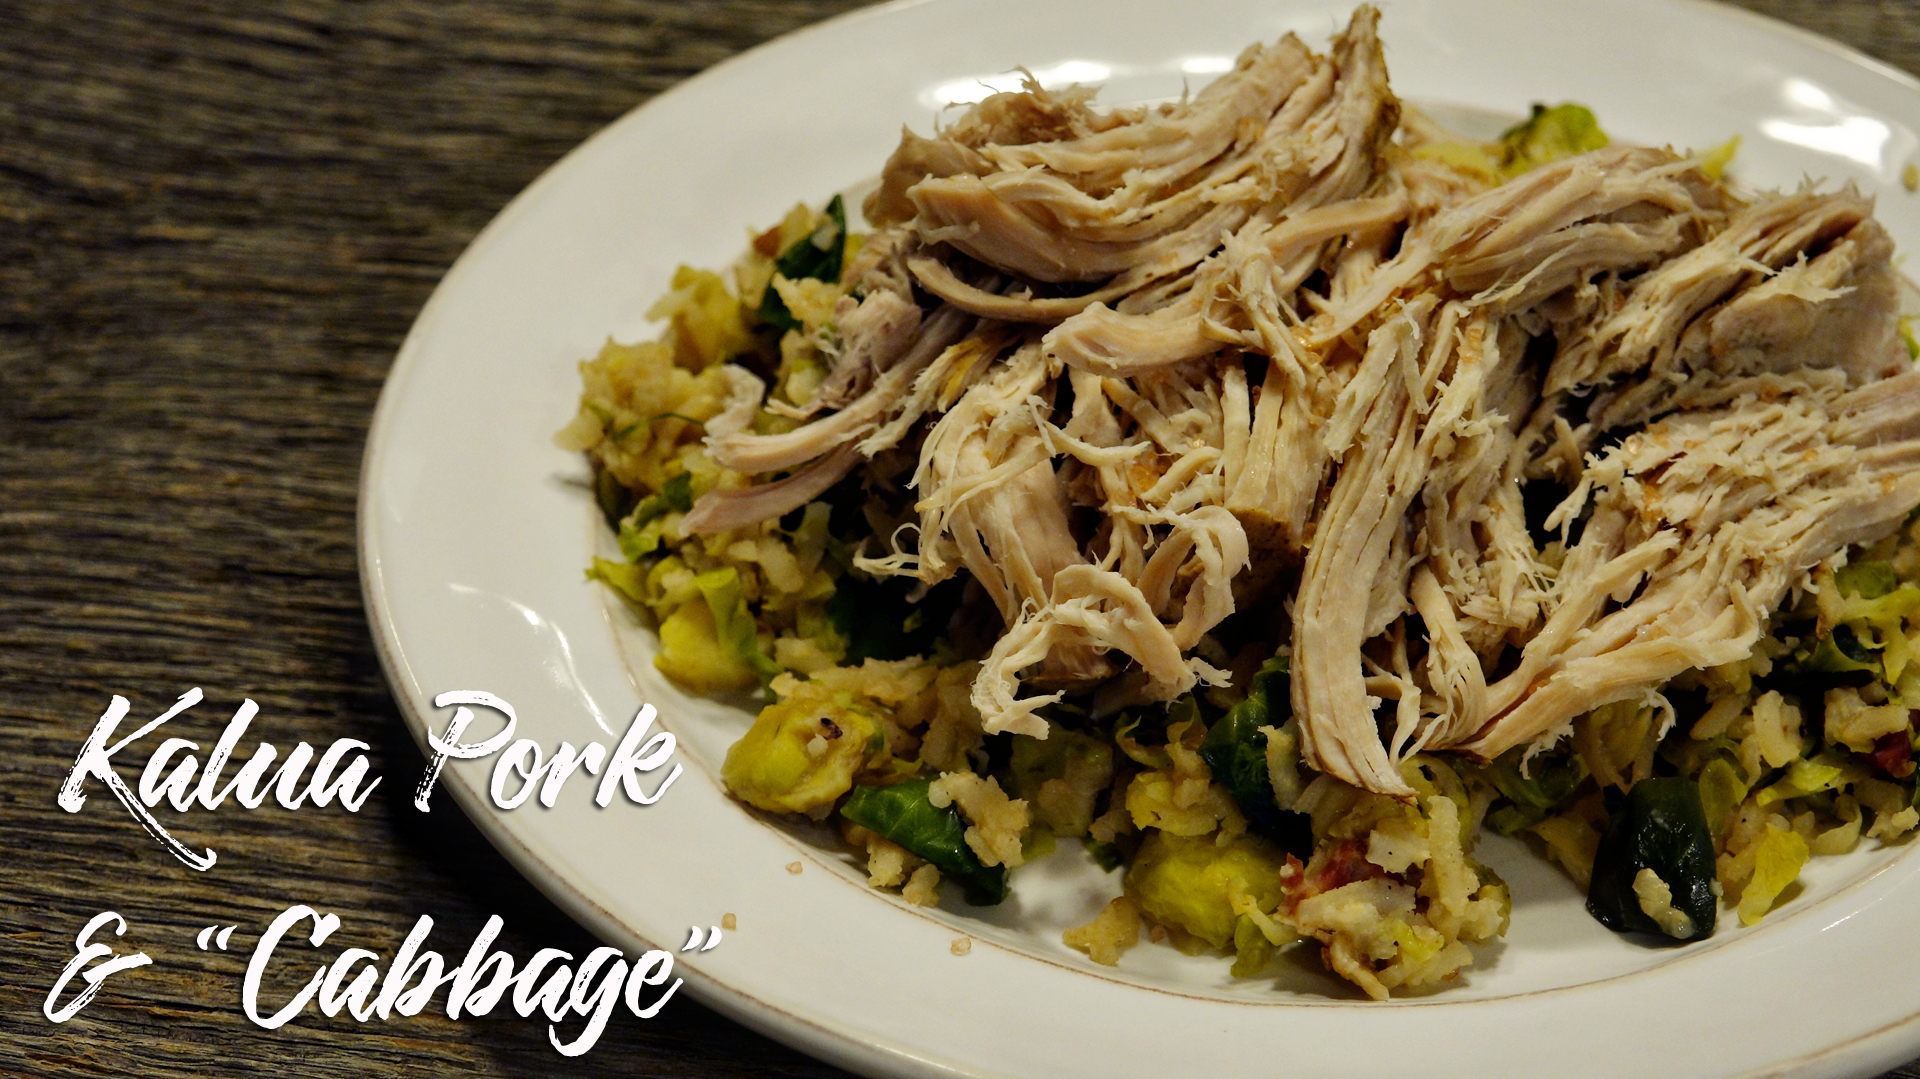 Kalua Pork and “Cabbage”